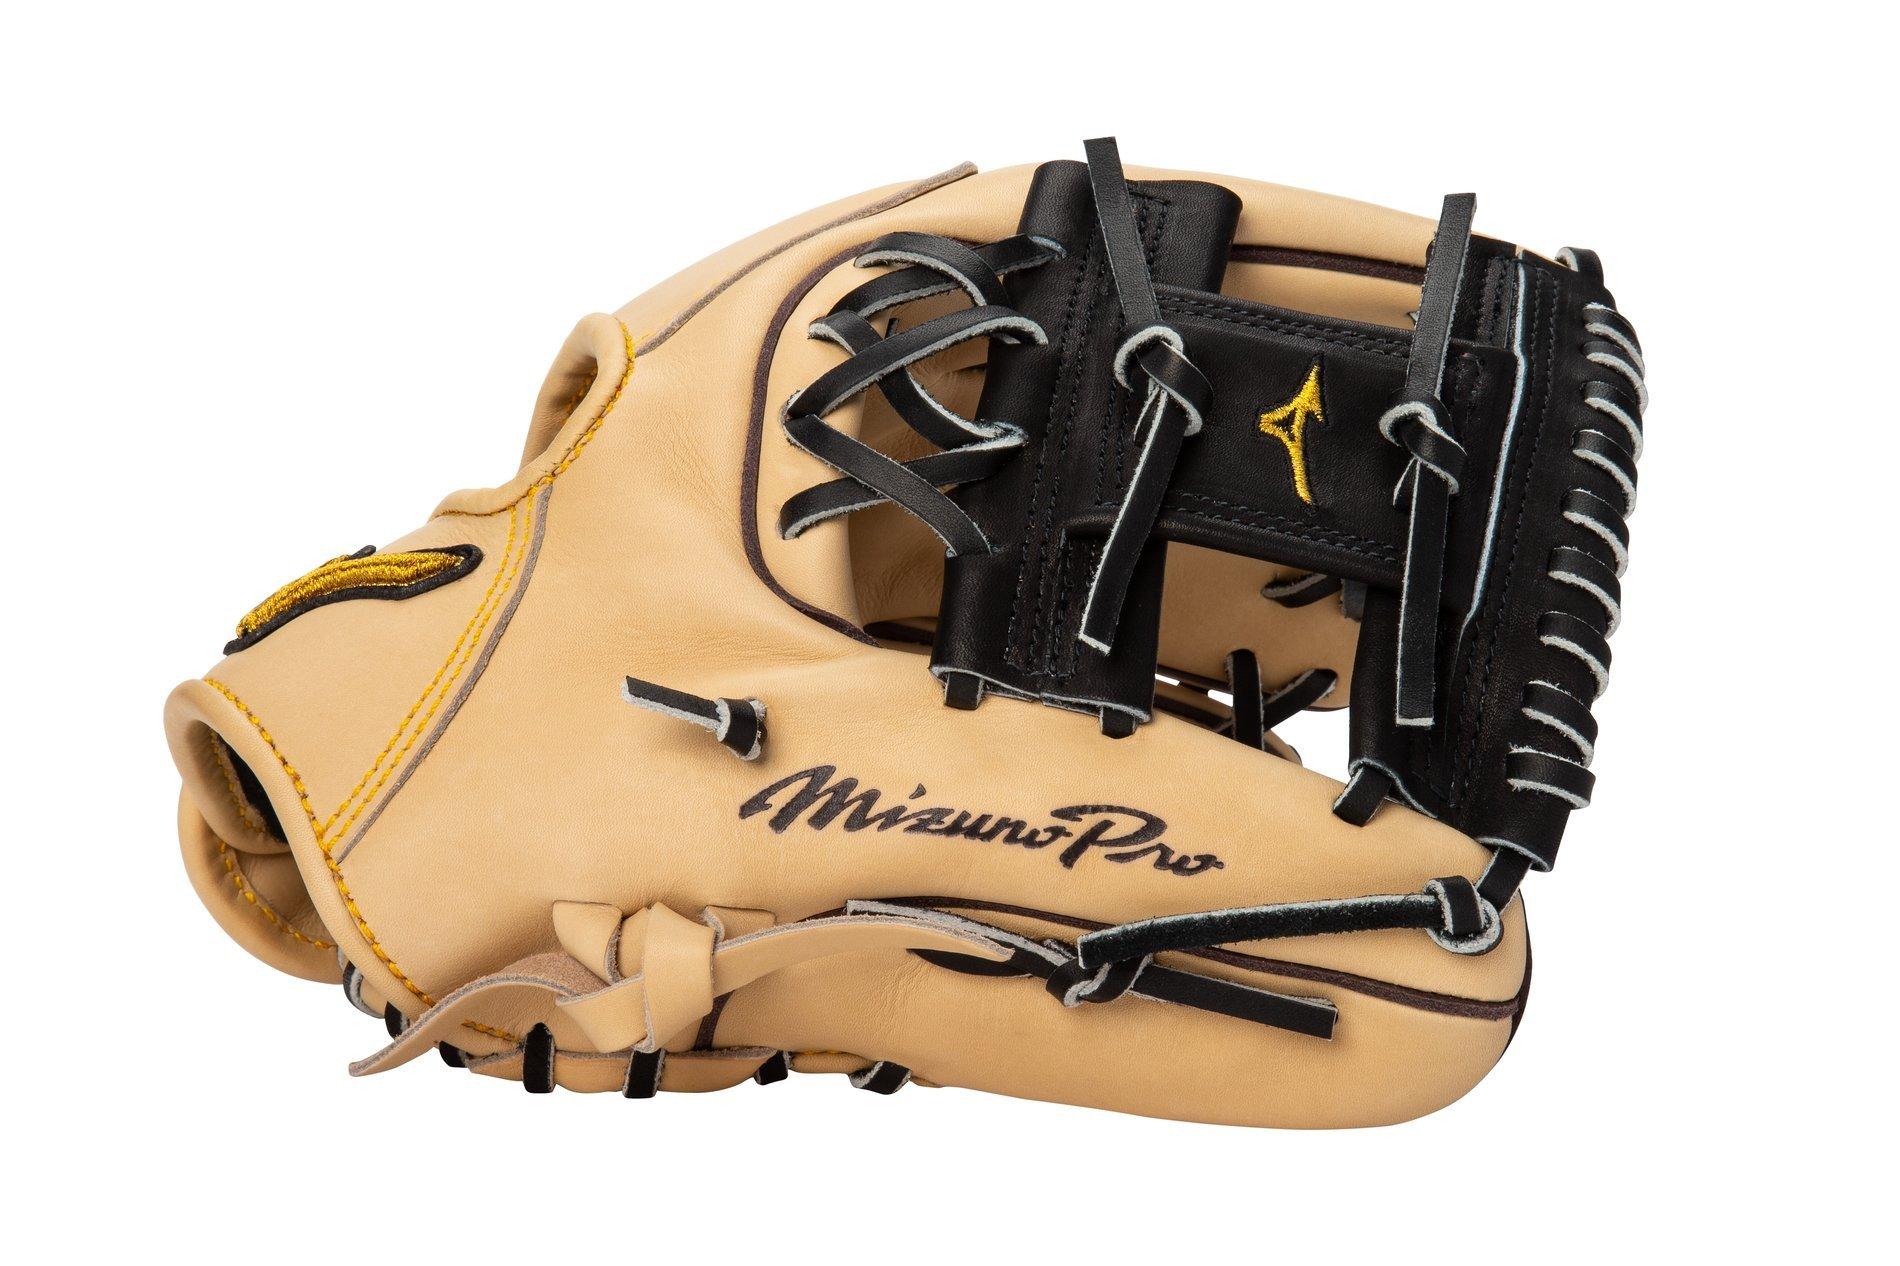 Mizuno Pro Baseball Glove Series 